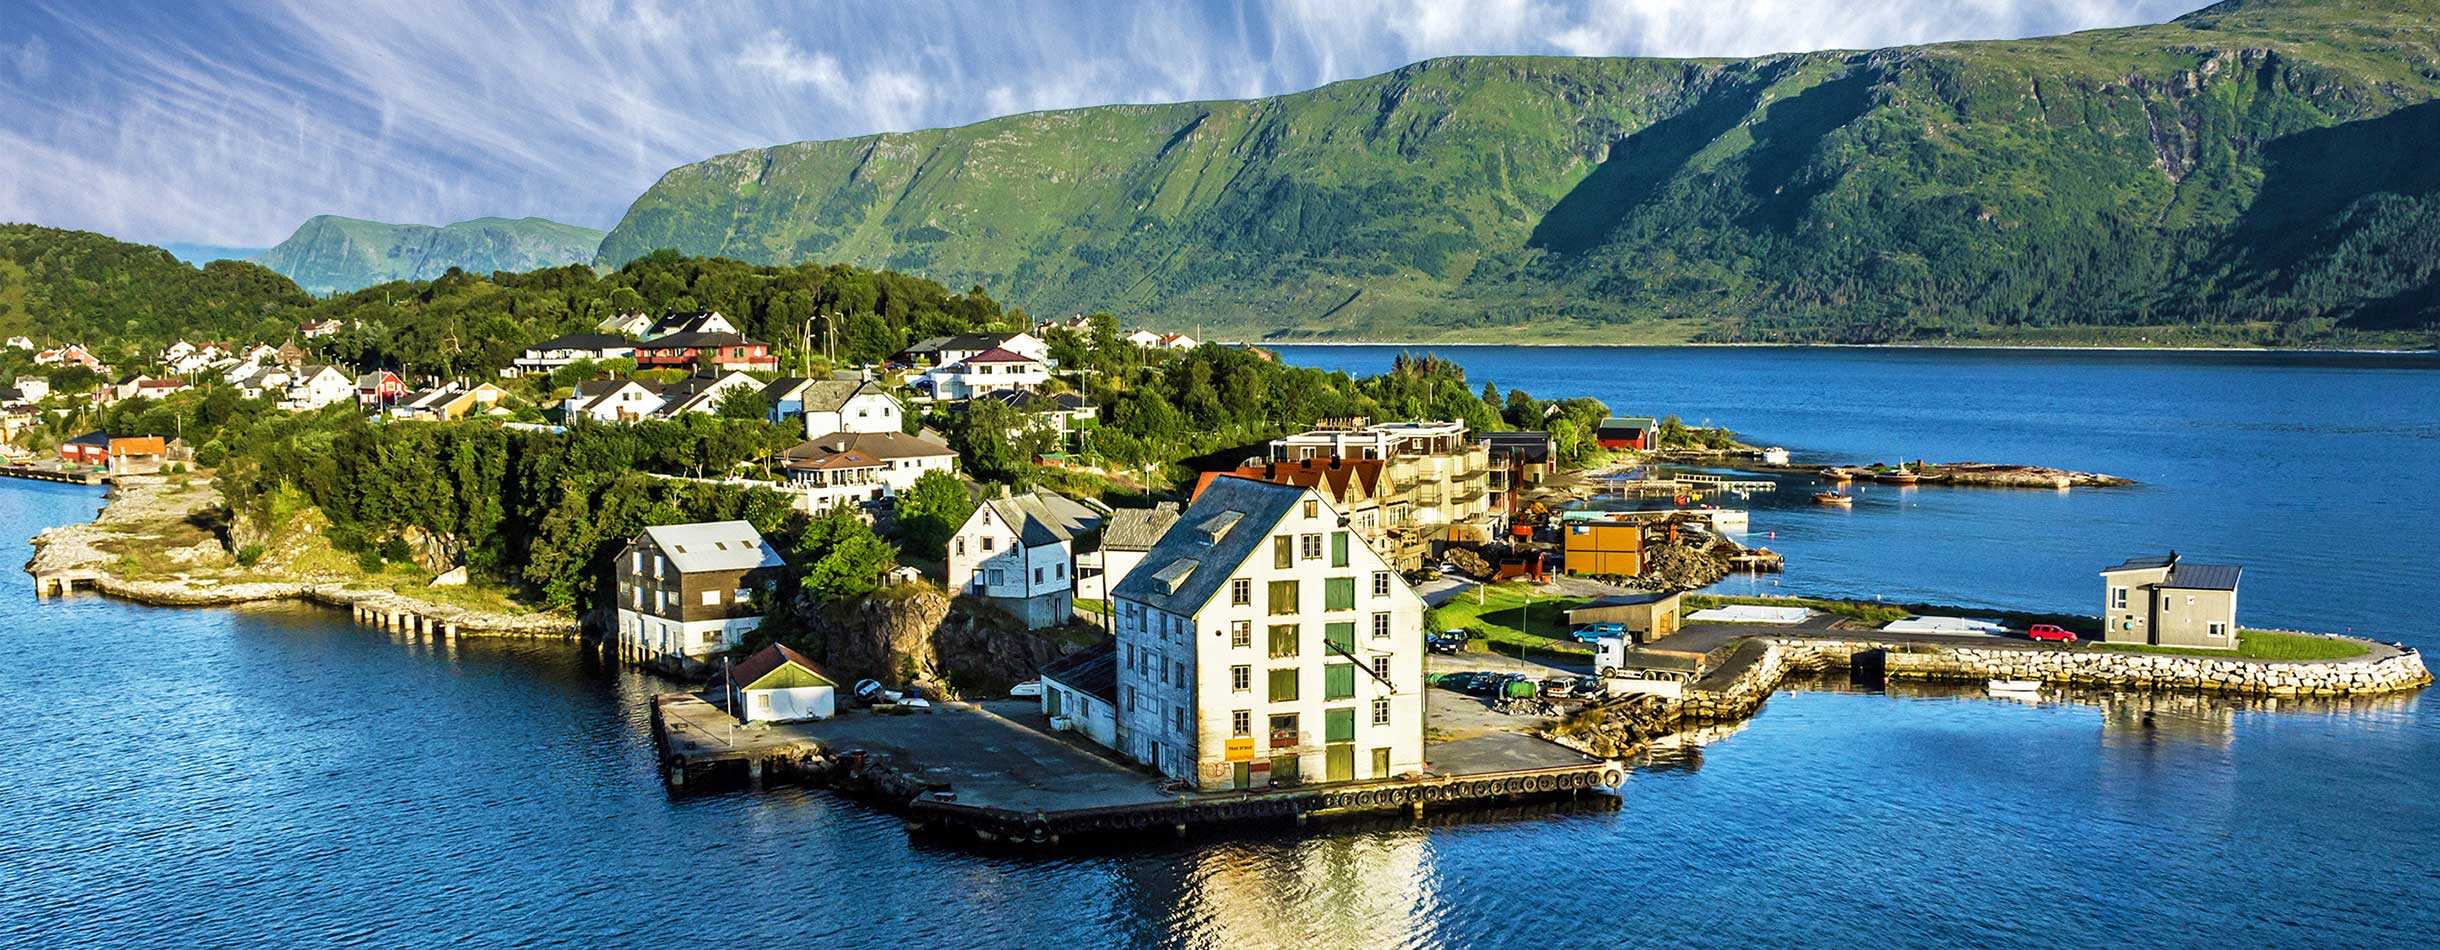 Alesund, Norway. Sea view on houses on island, Norway